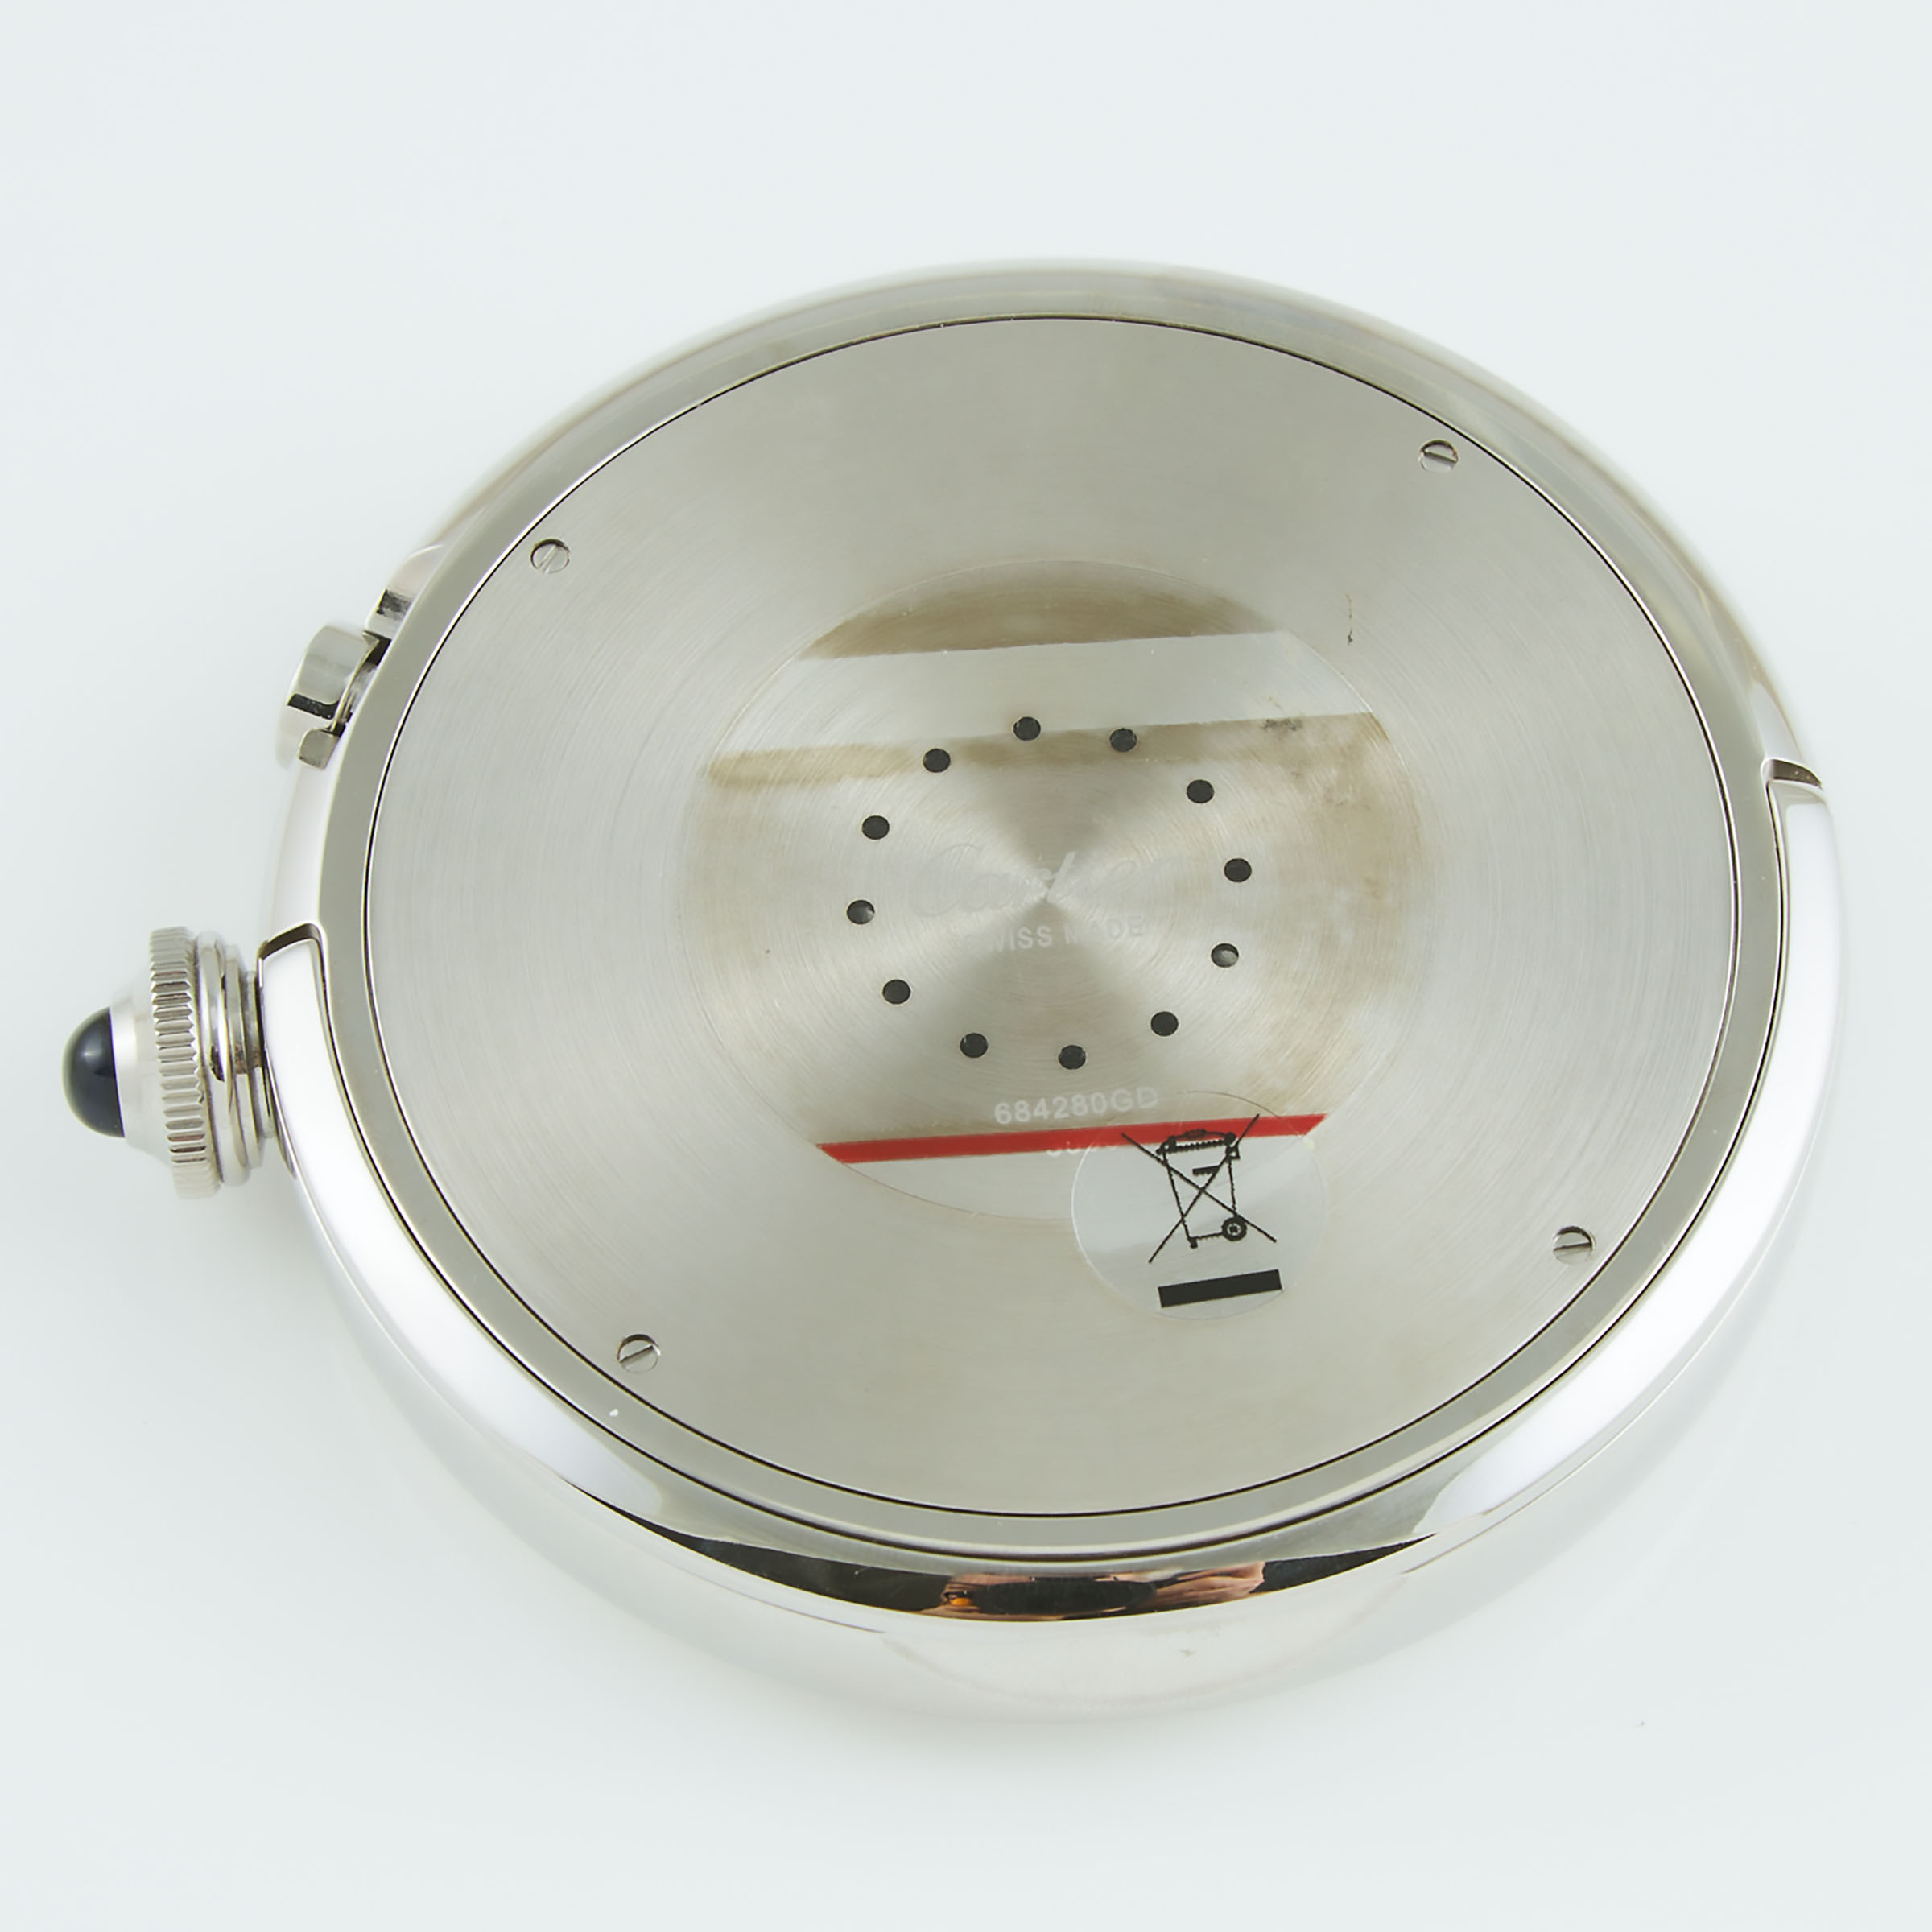 Cartier Travel Alarm Clock